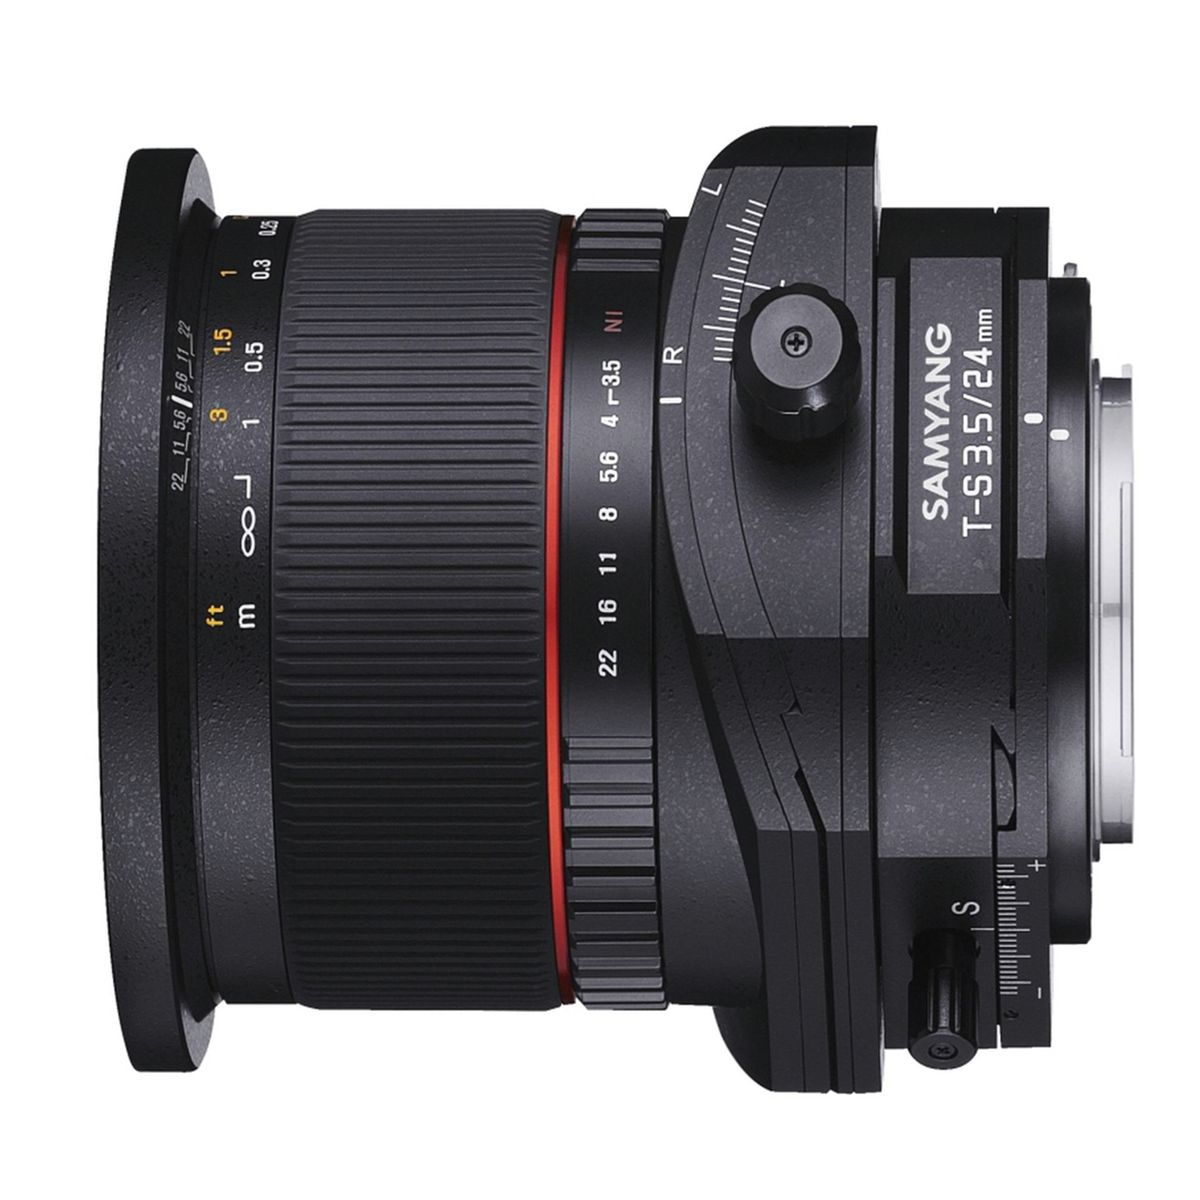 3,5/24 SAMYANG T/S 24 MF (Objektiv 3:30 Canon Schwarz) - für mm EF Canon EF-Mount,